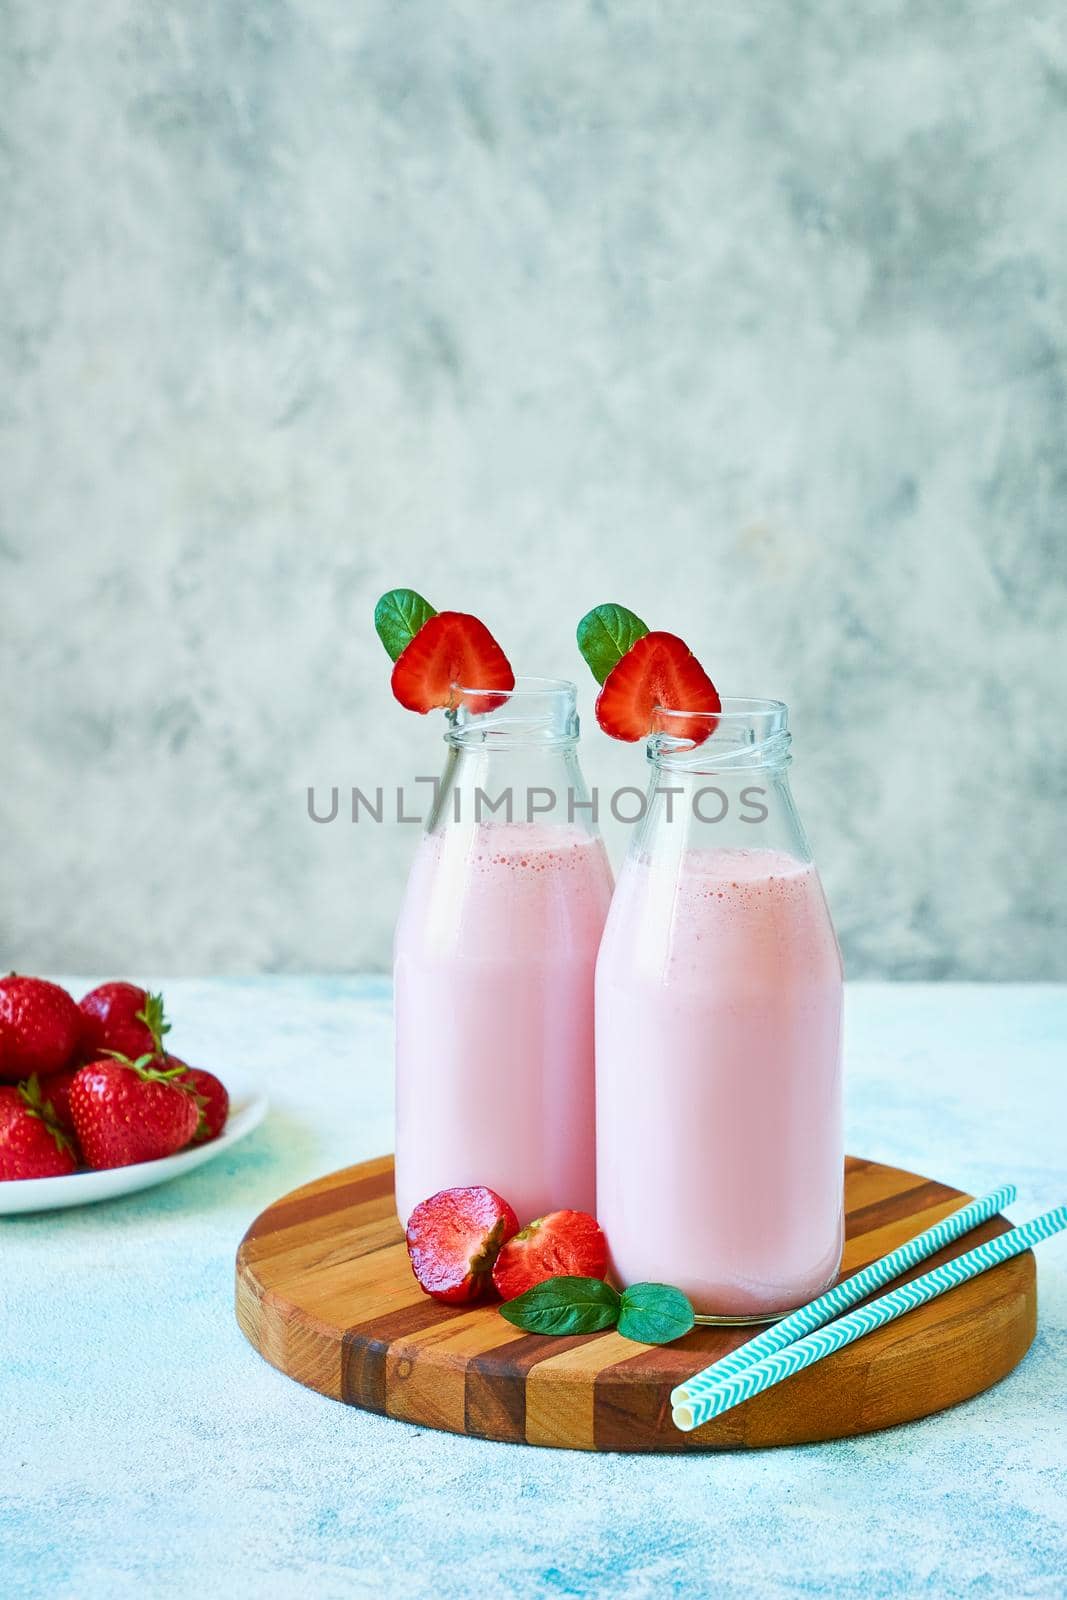 Strawberry smoothie or milkshake in glass jar with berries on blue concrete background. by Svetlana_Belozerova